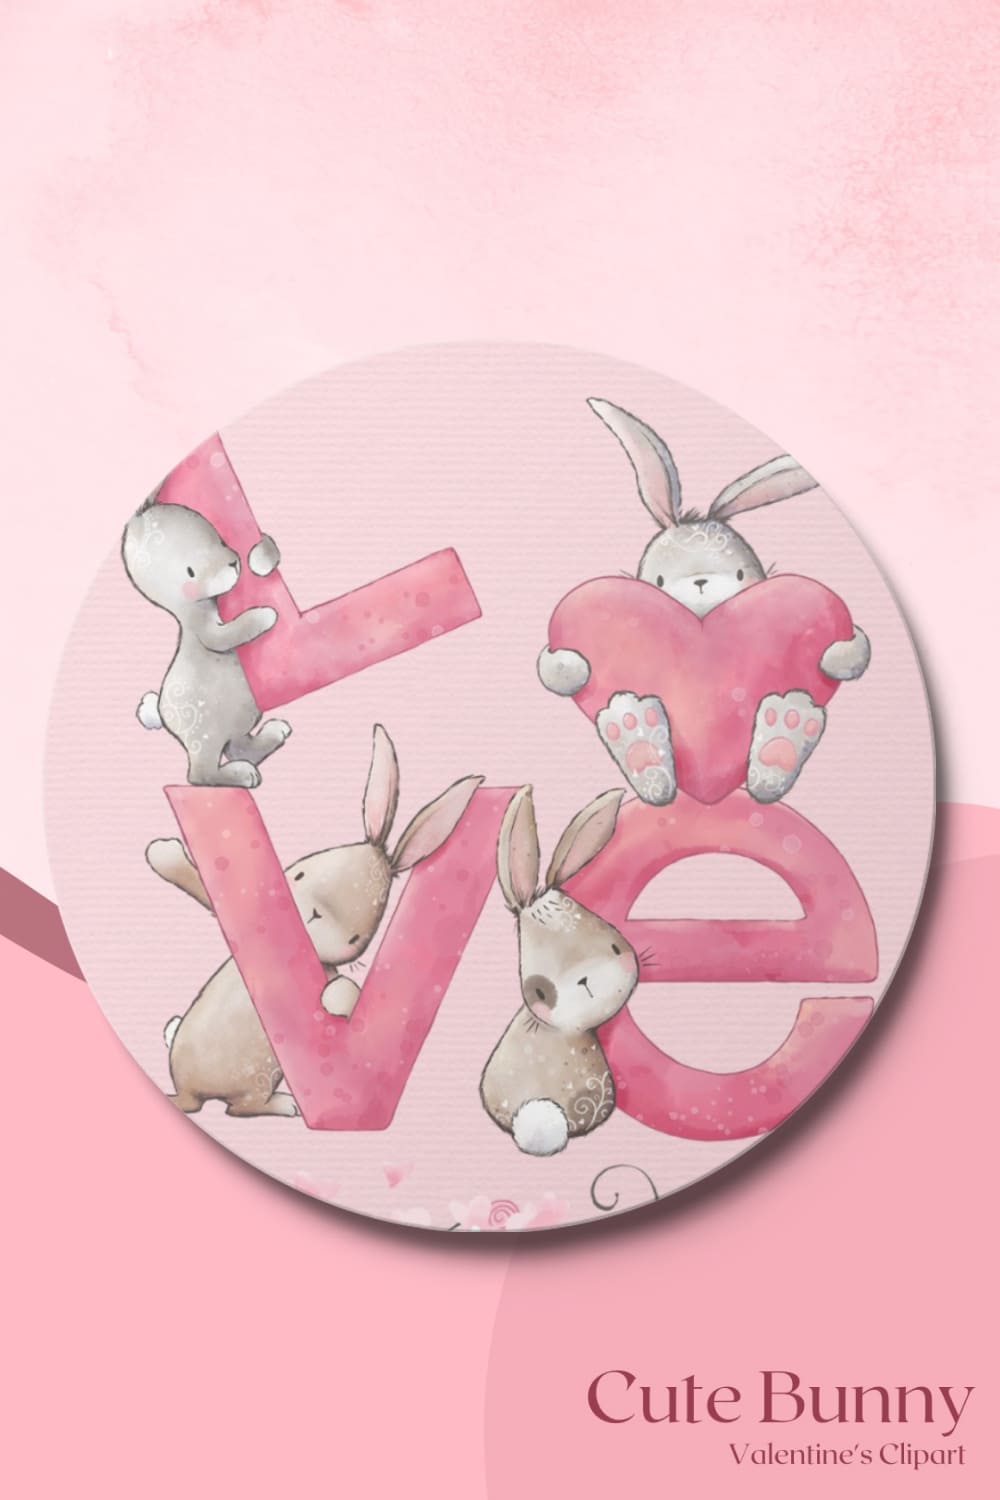 Cute Bunny Valentine's Clipart - Pinterest.